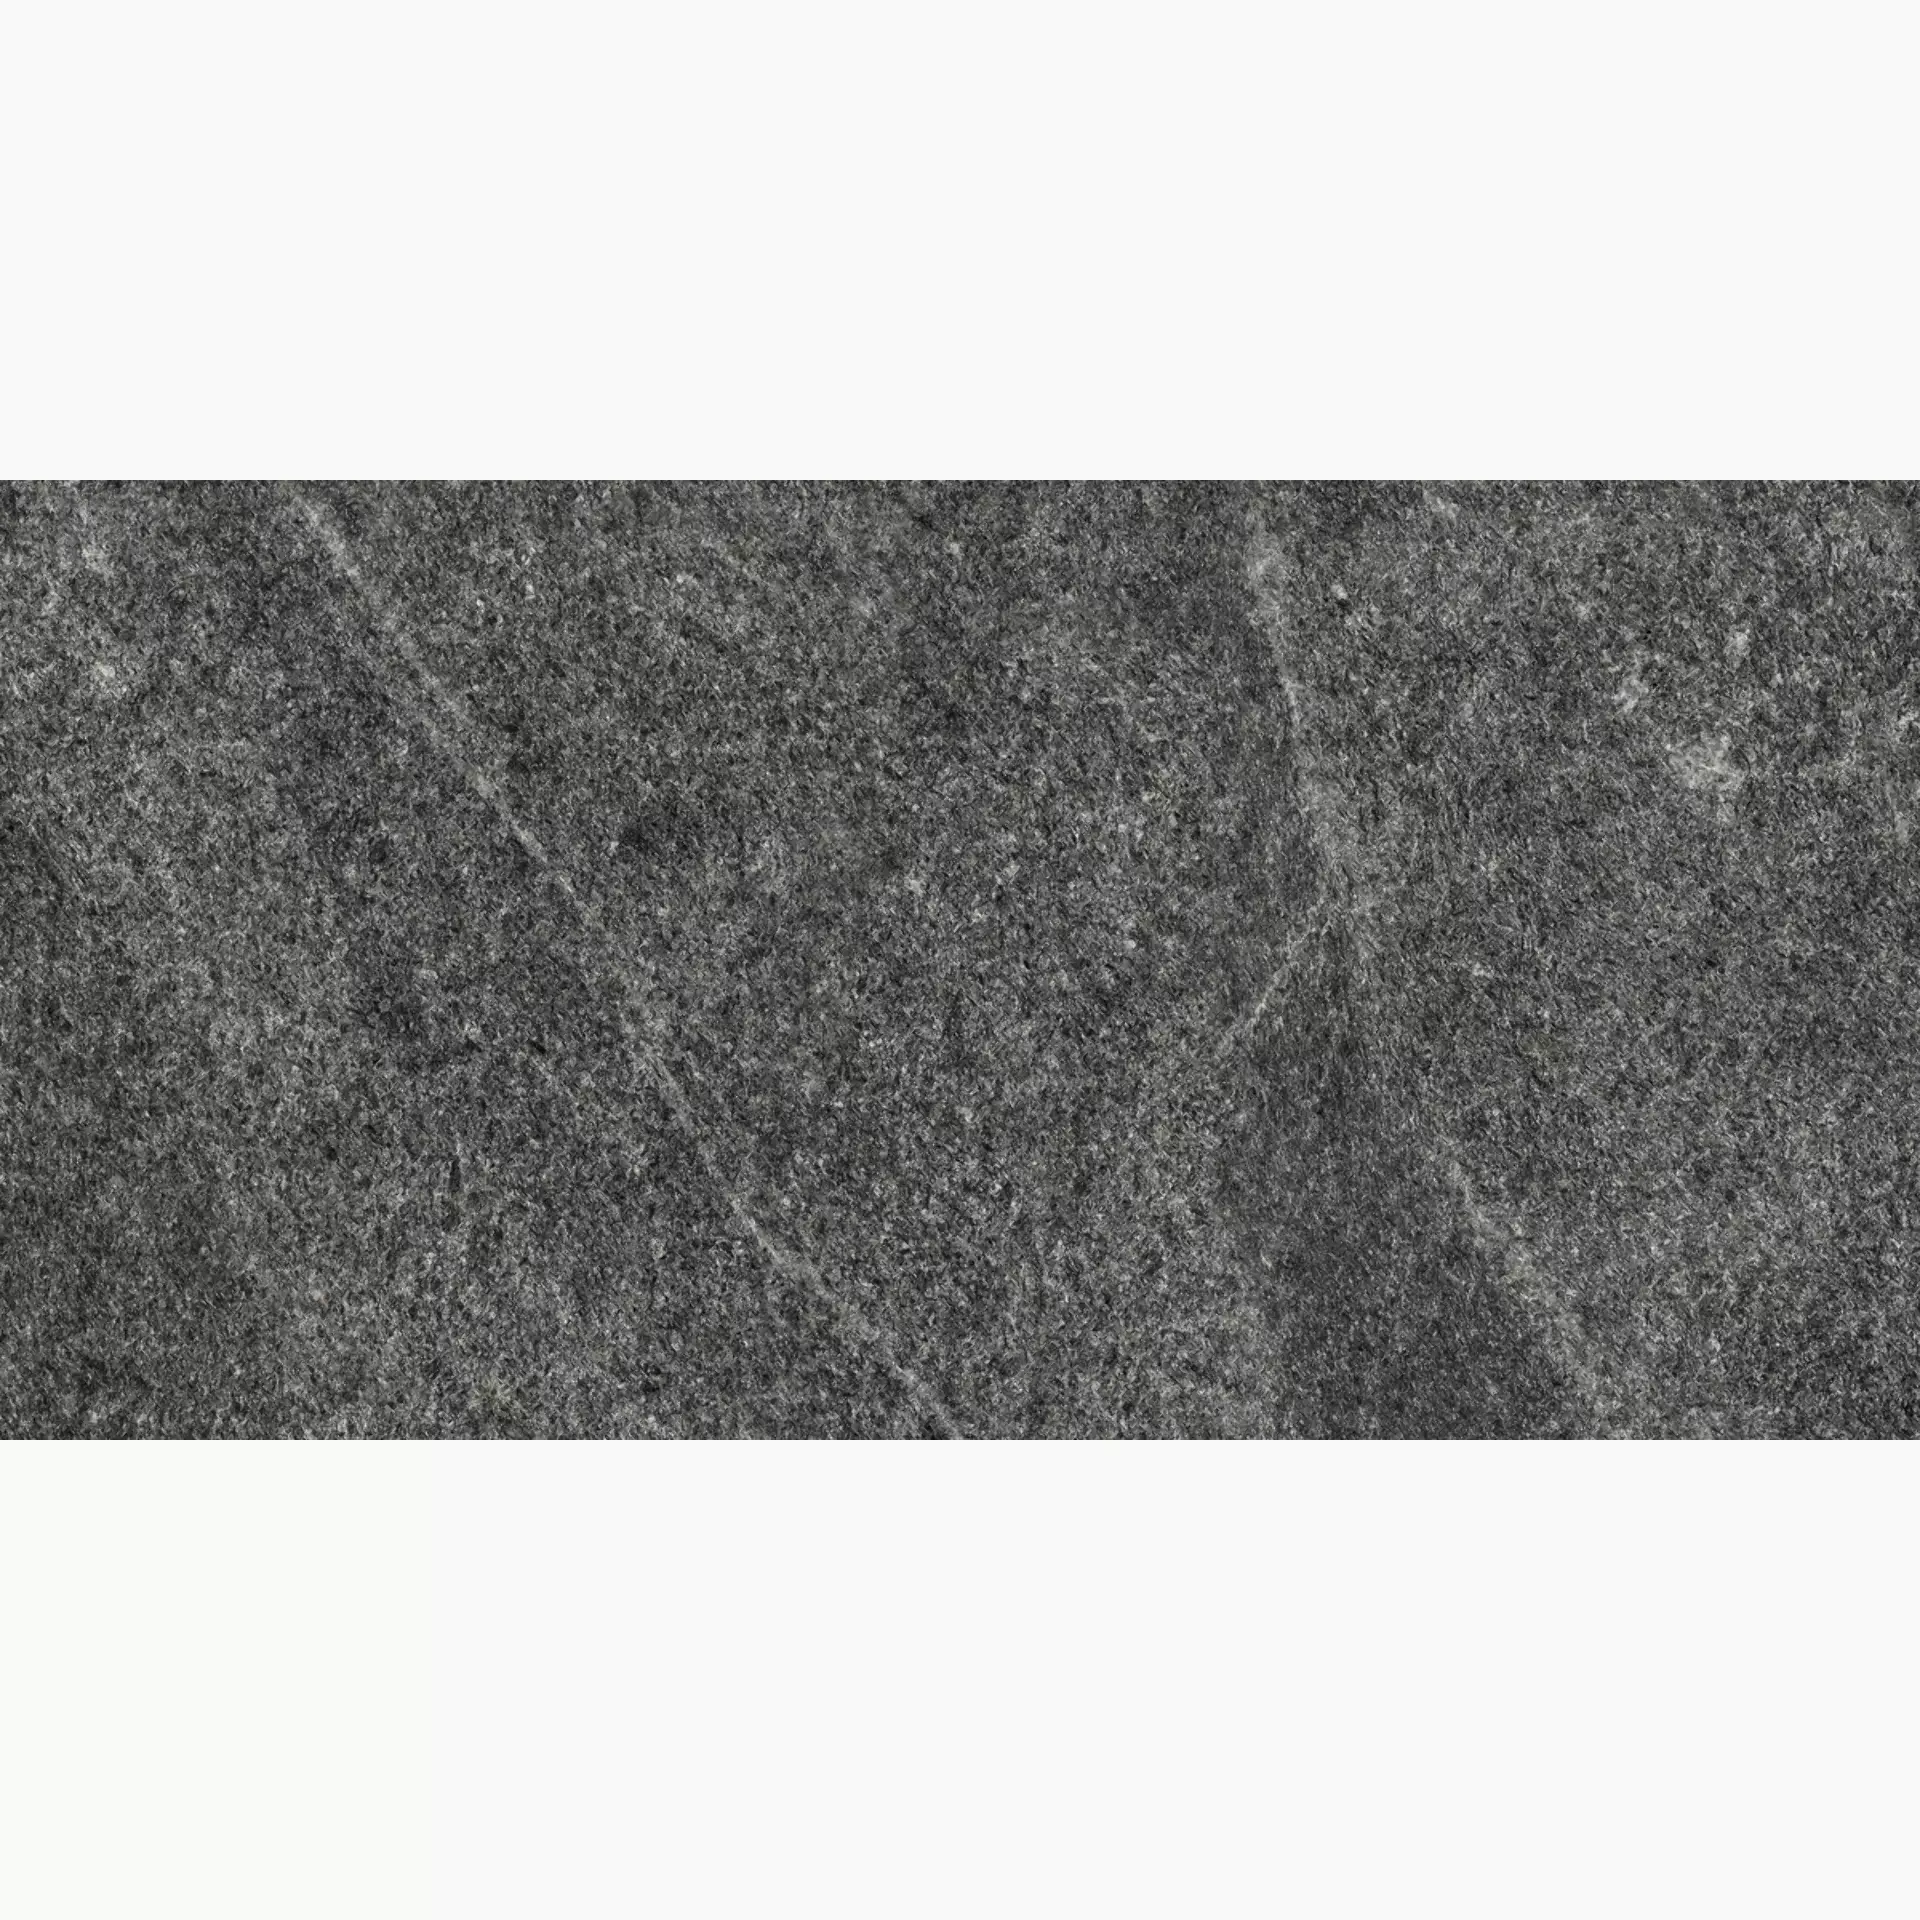 Bodenfliese,Wandfliese Marazzi Mystone Quarzite Black Strutturato Black MZU1 strukturiert 30x60cm rektifiziert 10mm